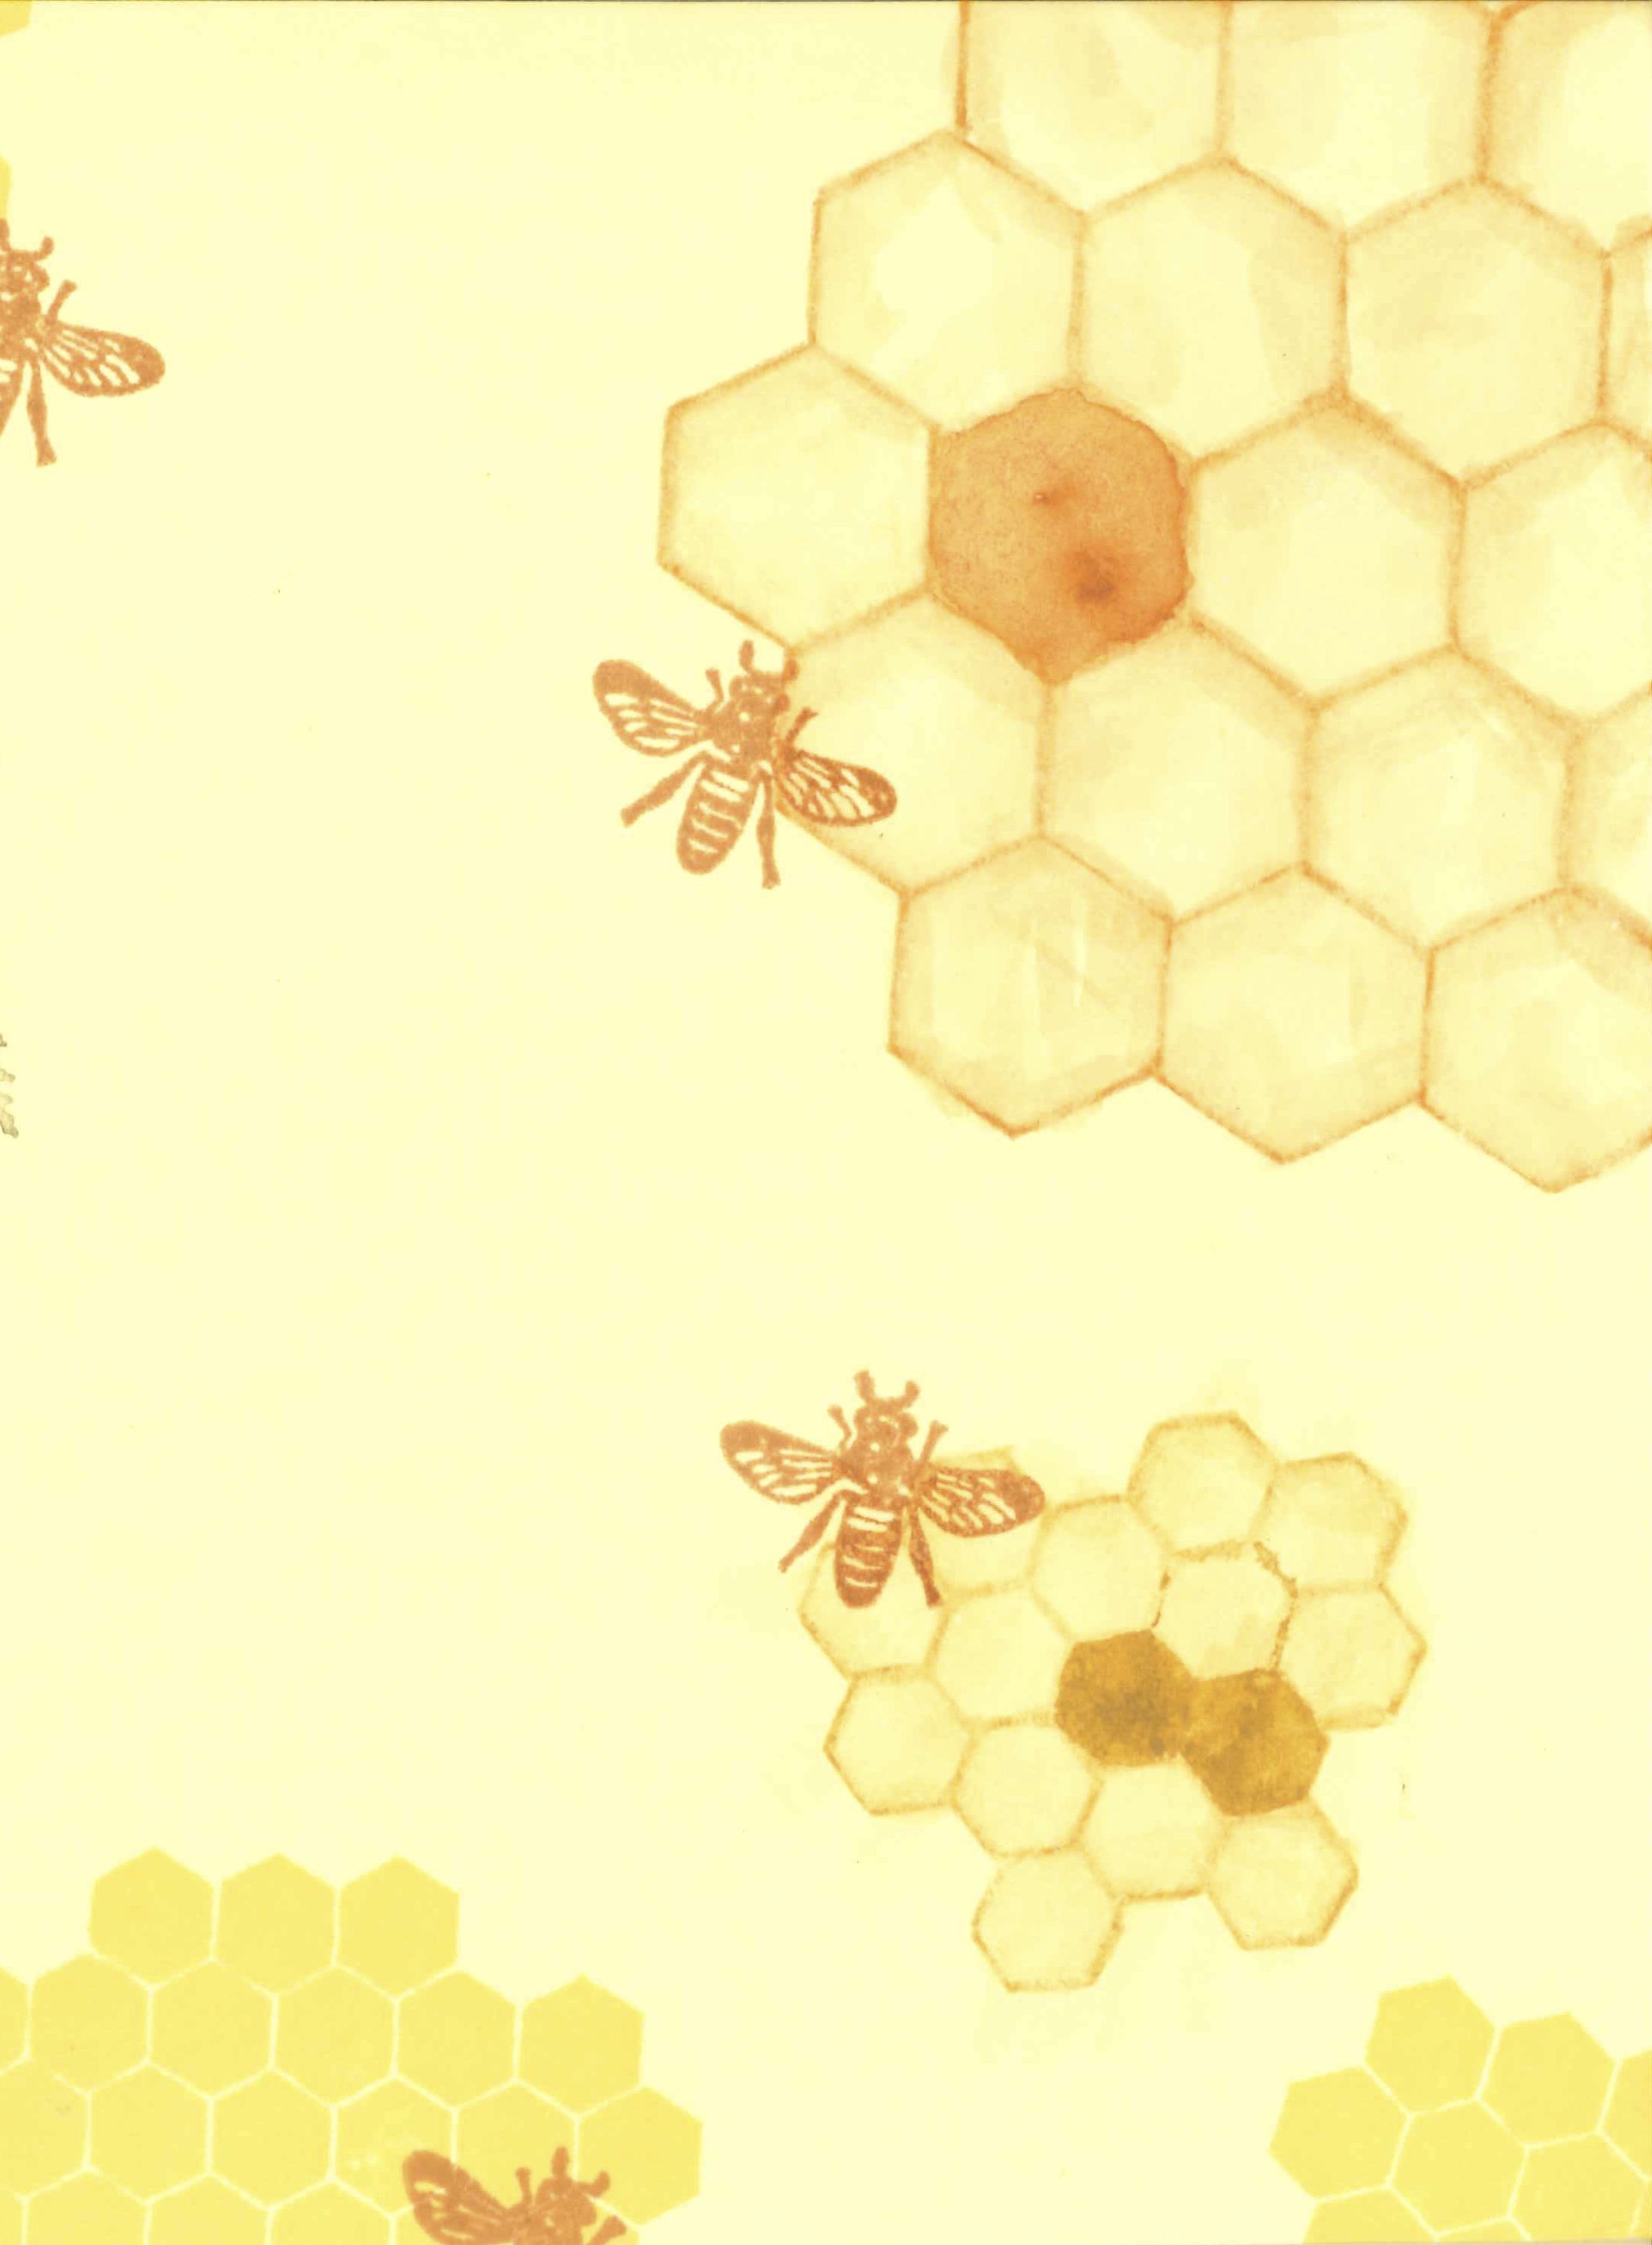 honeycomb drawing